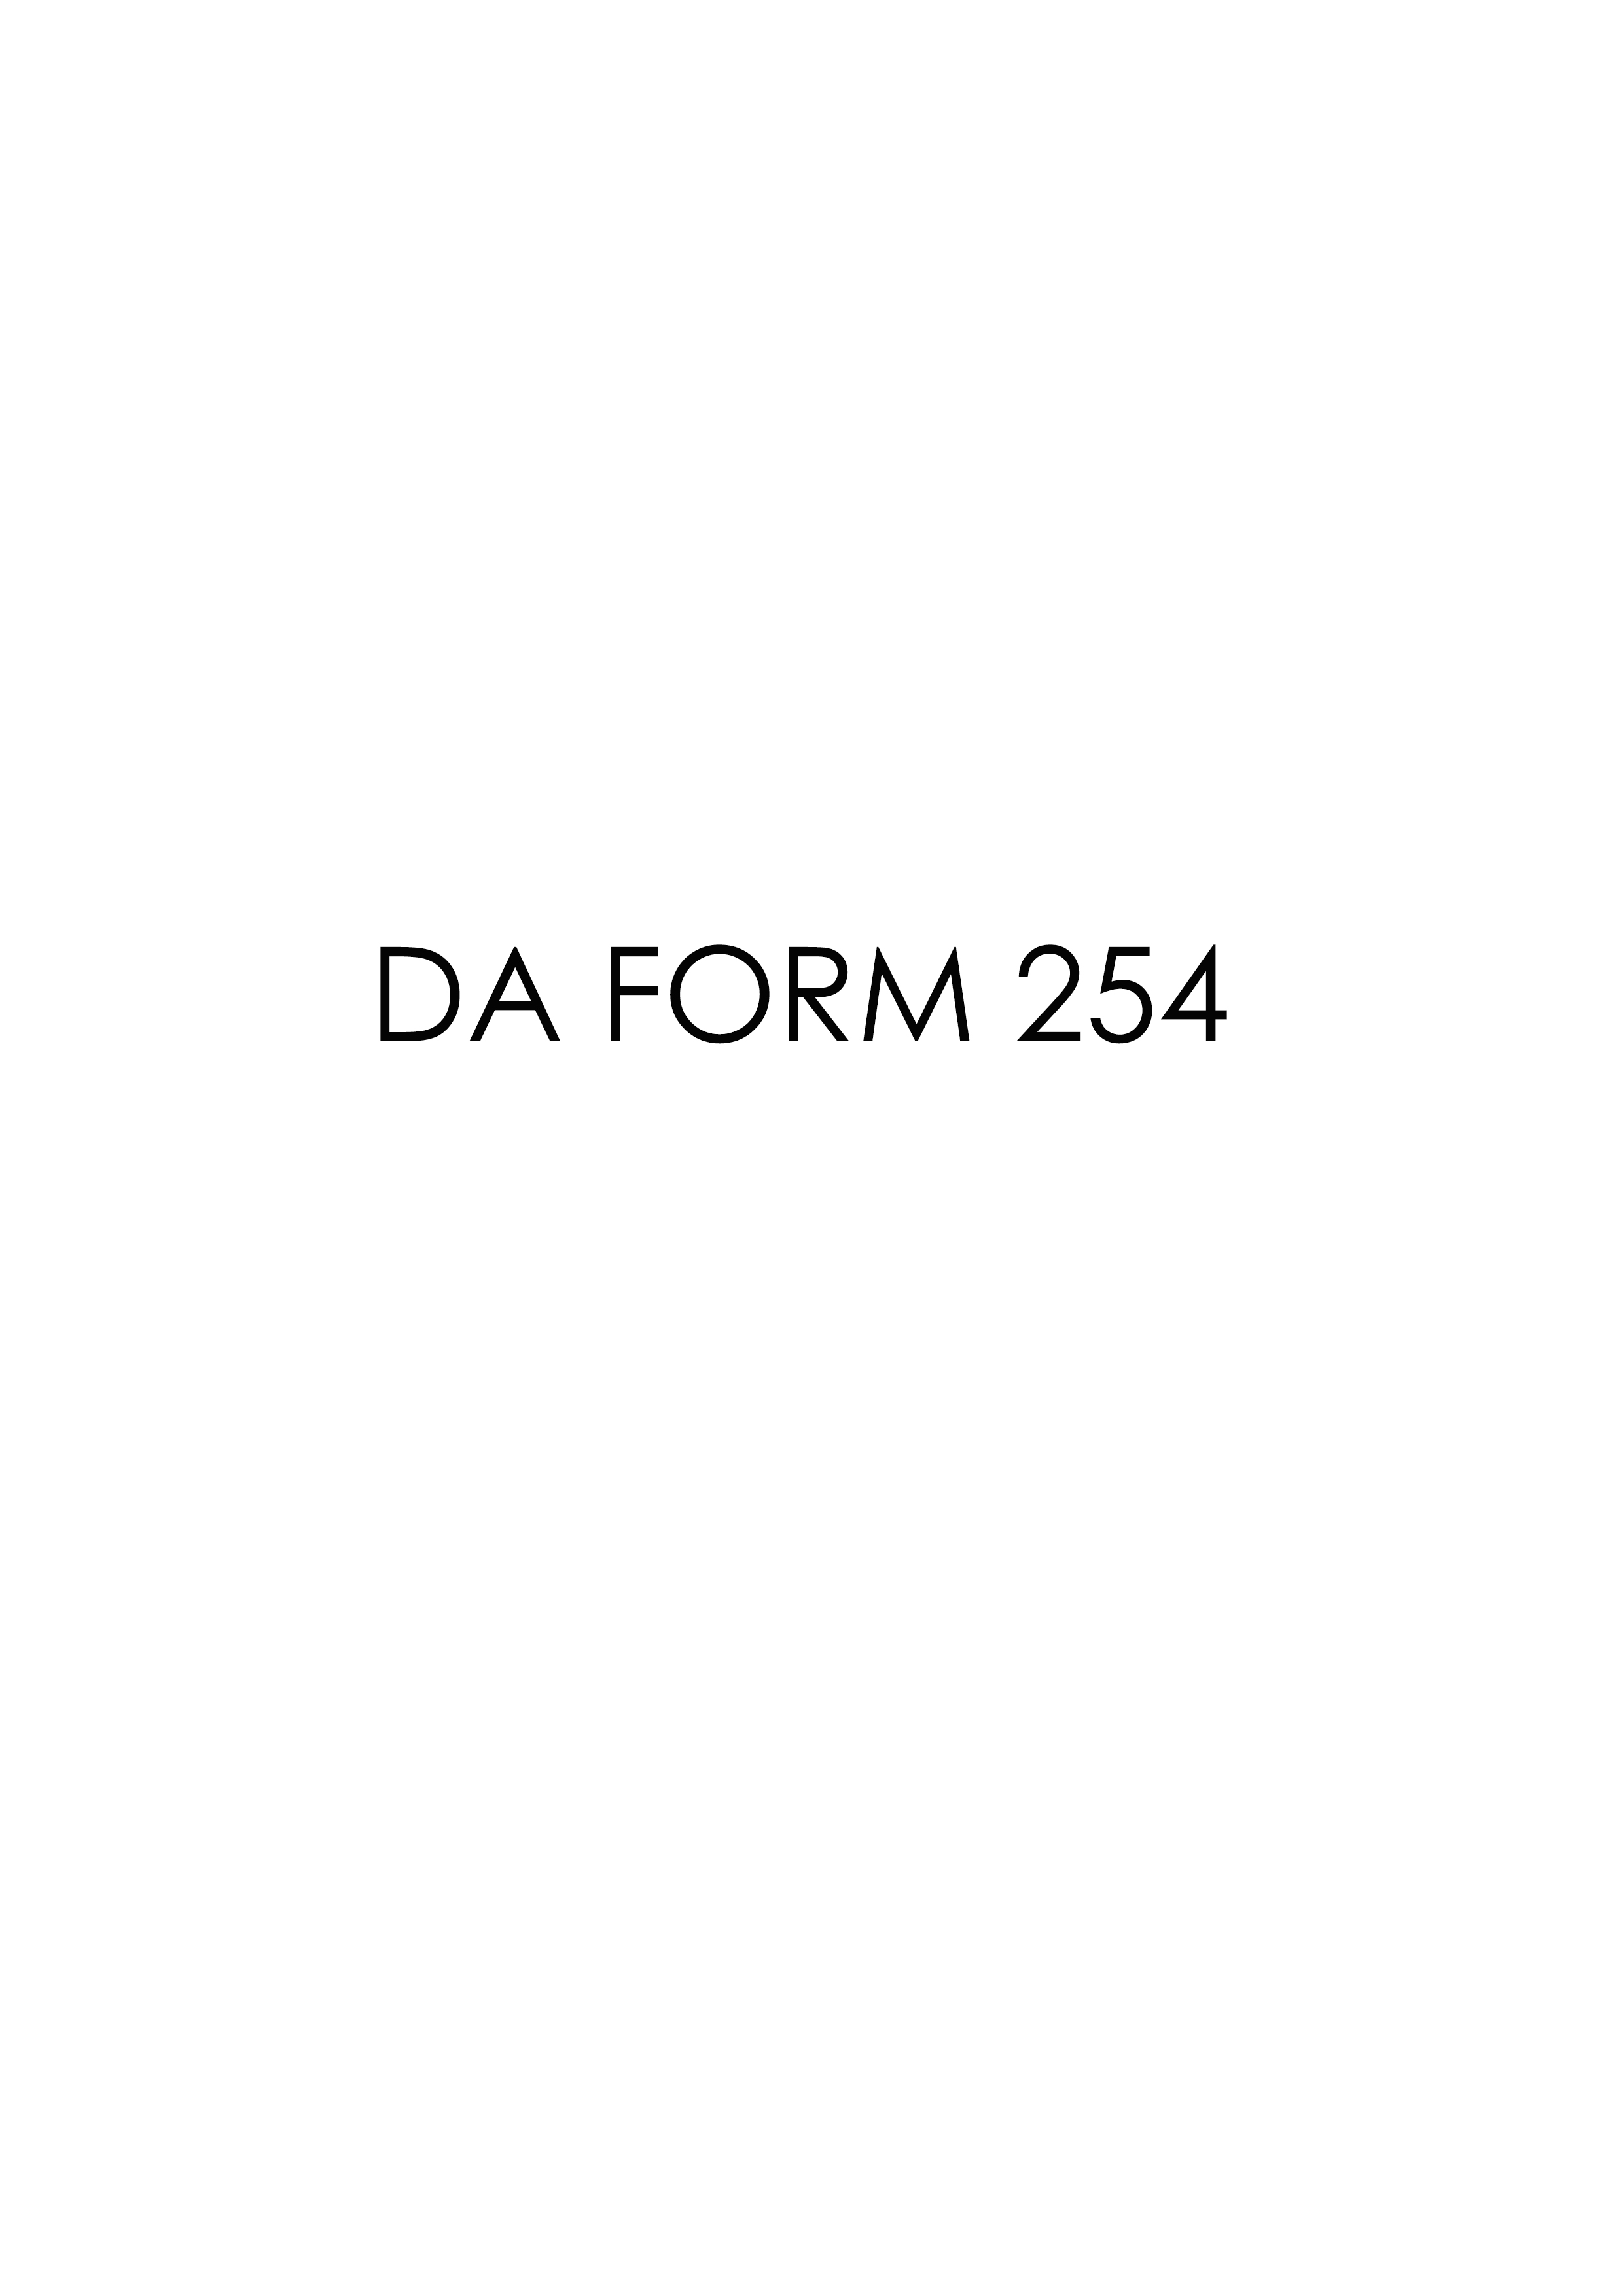 da Form 254 fillable